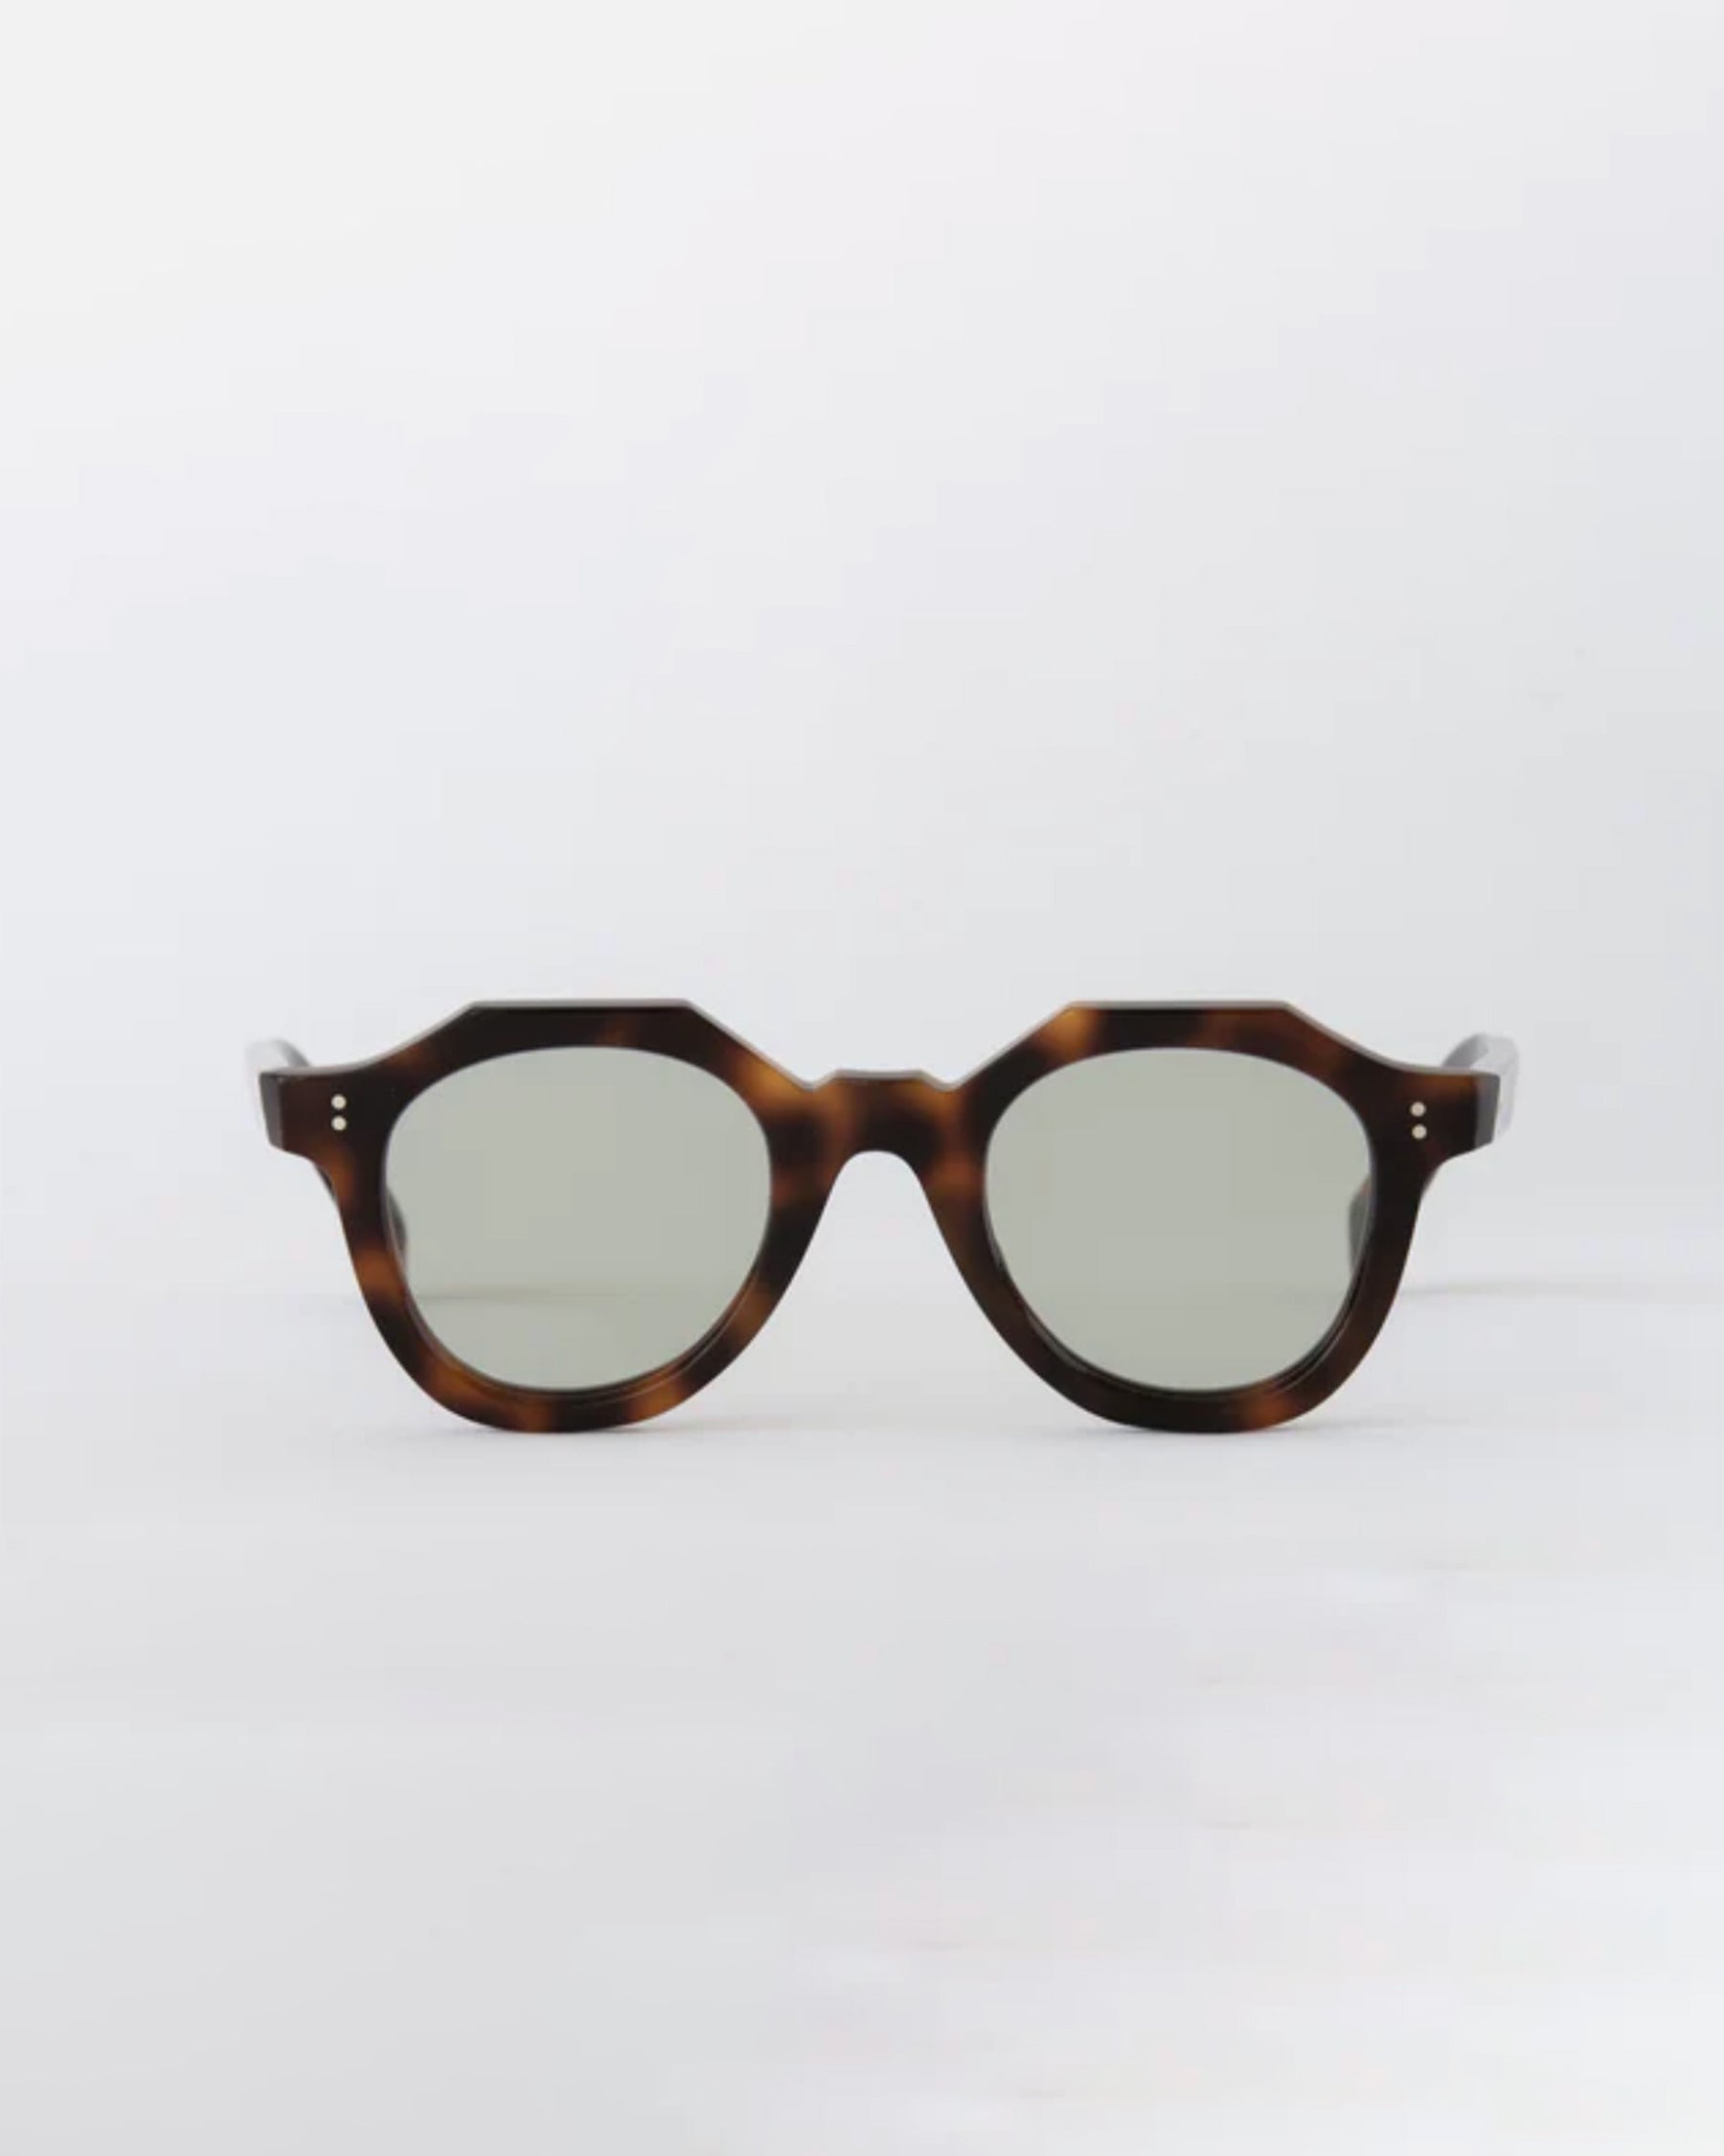 gp-02 Sunglasses ecalle / Lens: Green